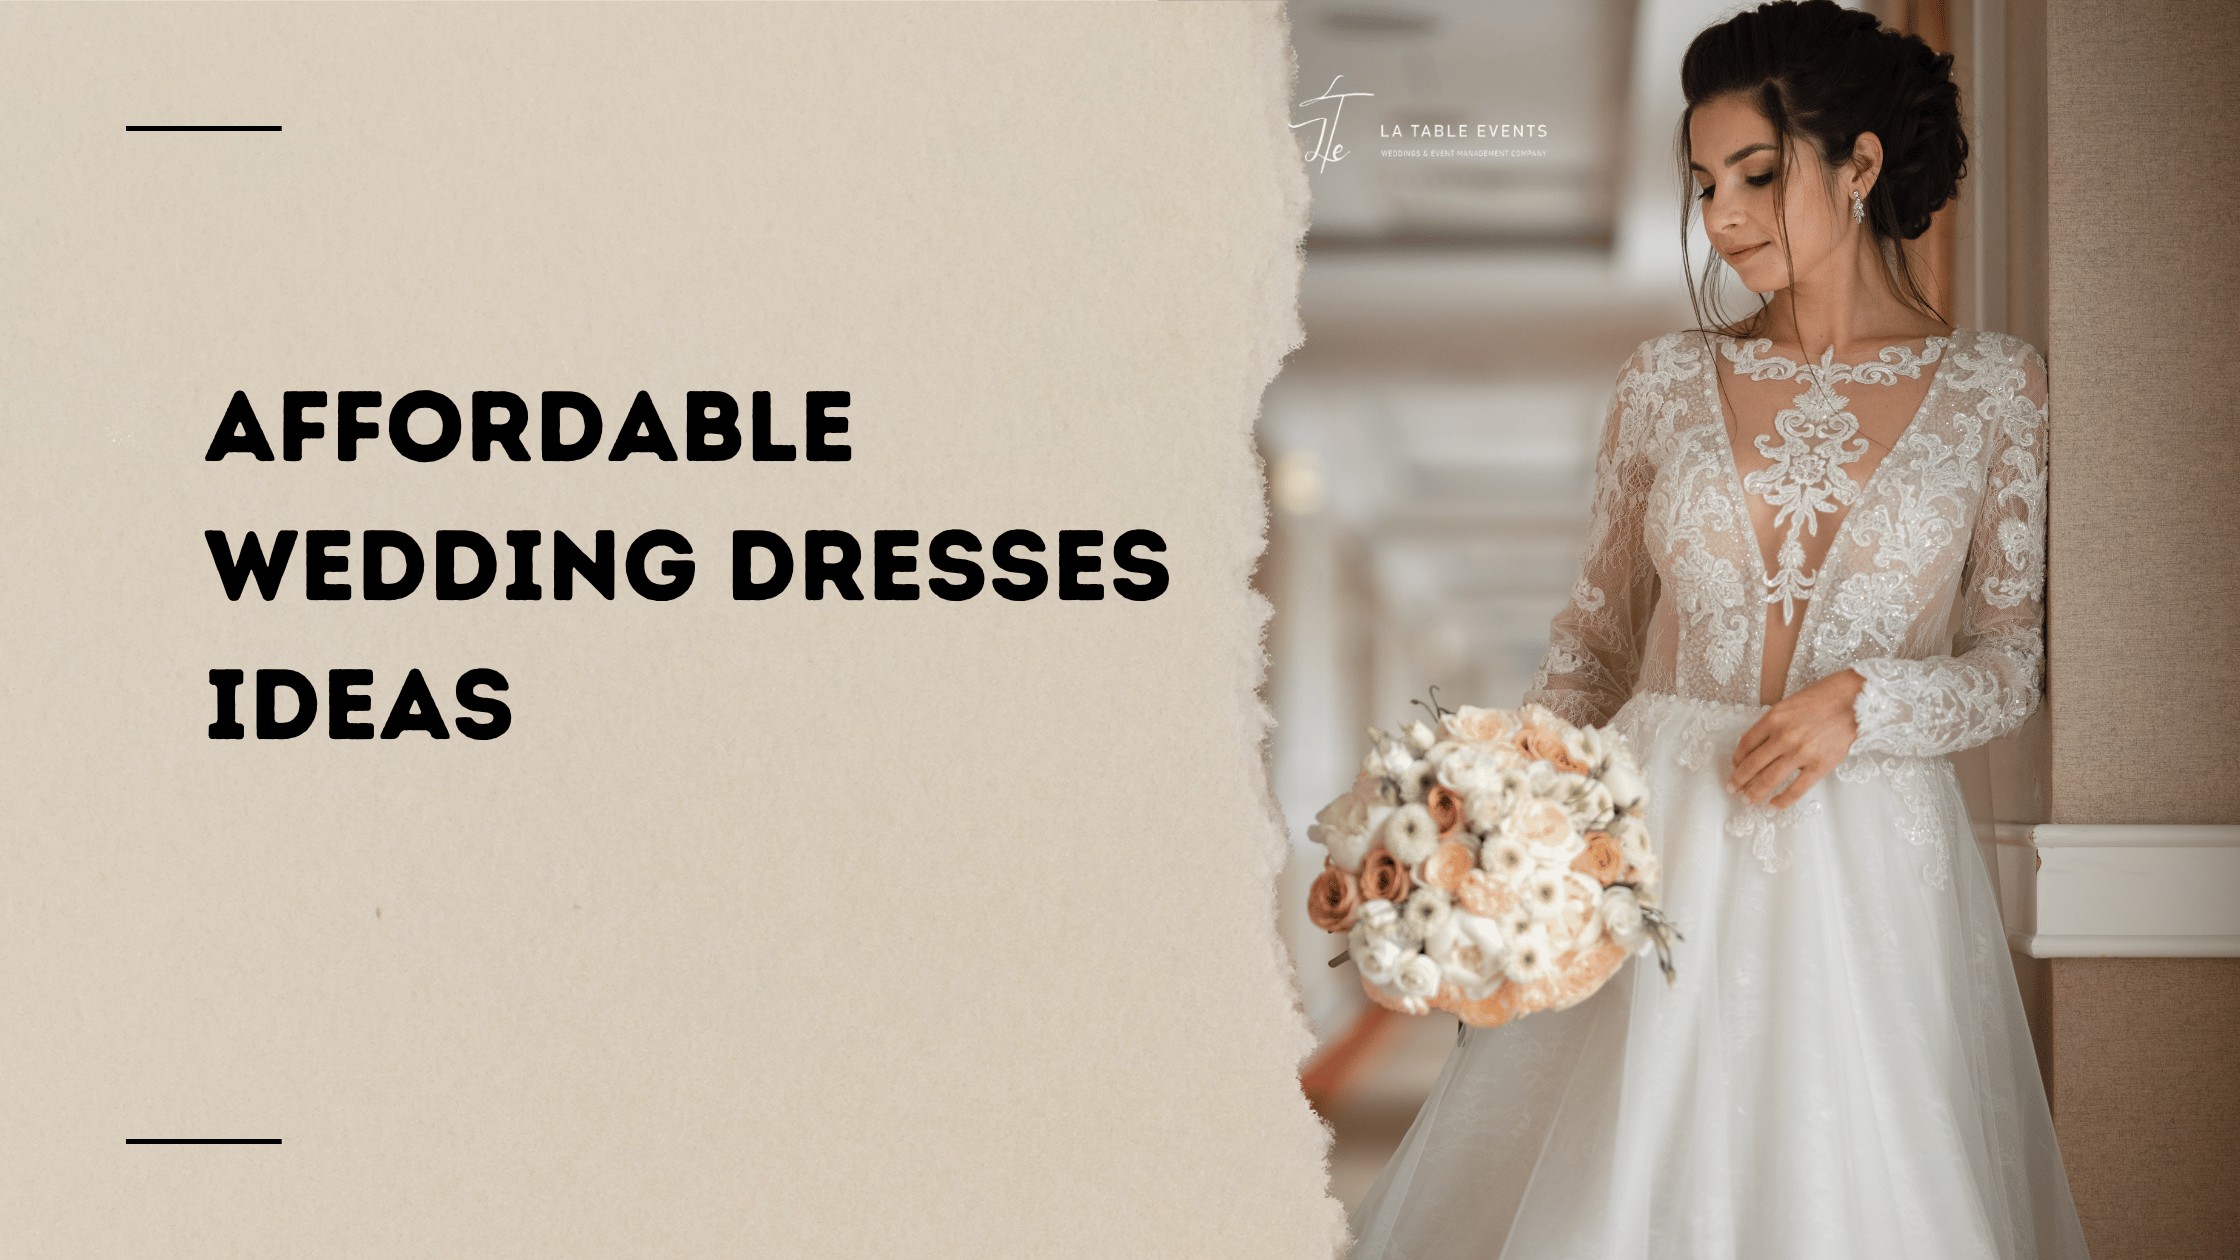 Affordable wedding dresses ideas